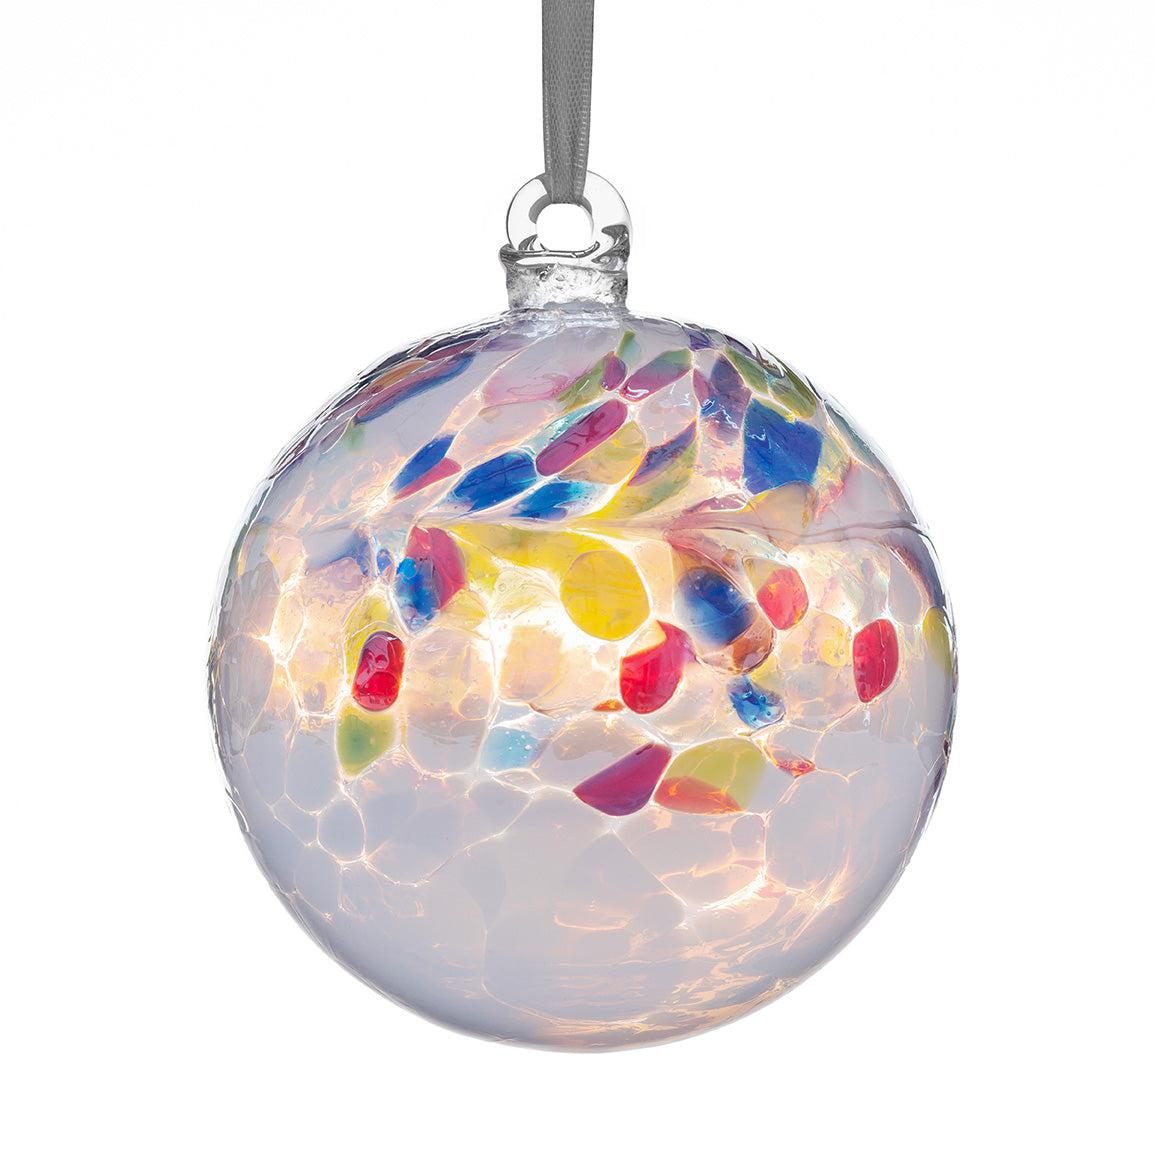 New Home - 10cm Friendship Ball - Aspire Art Glass